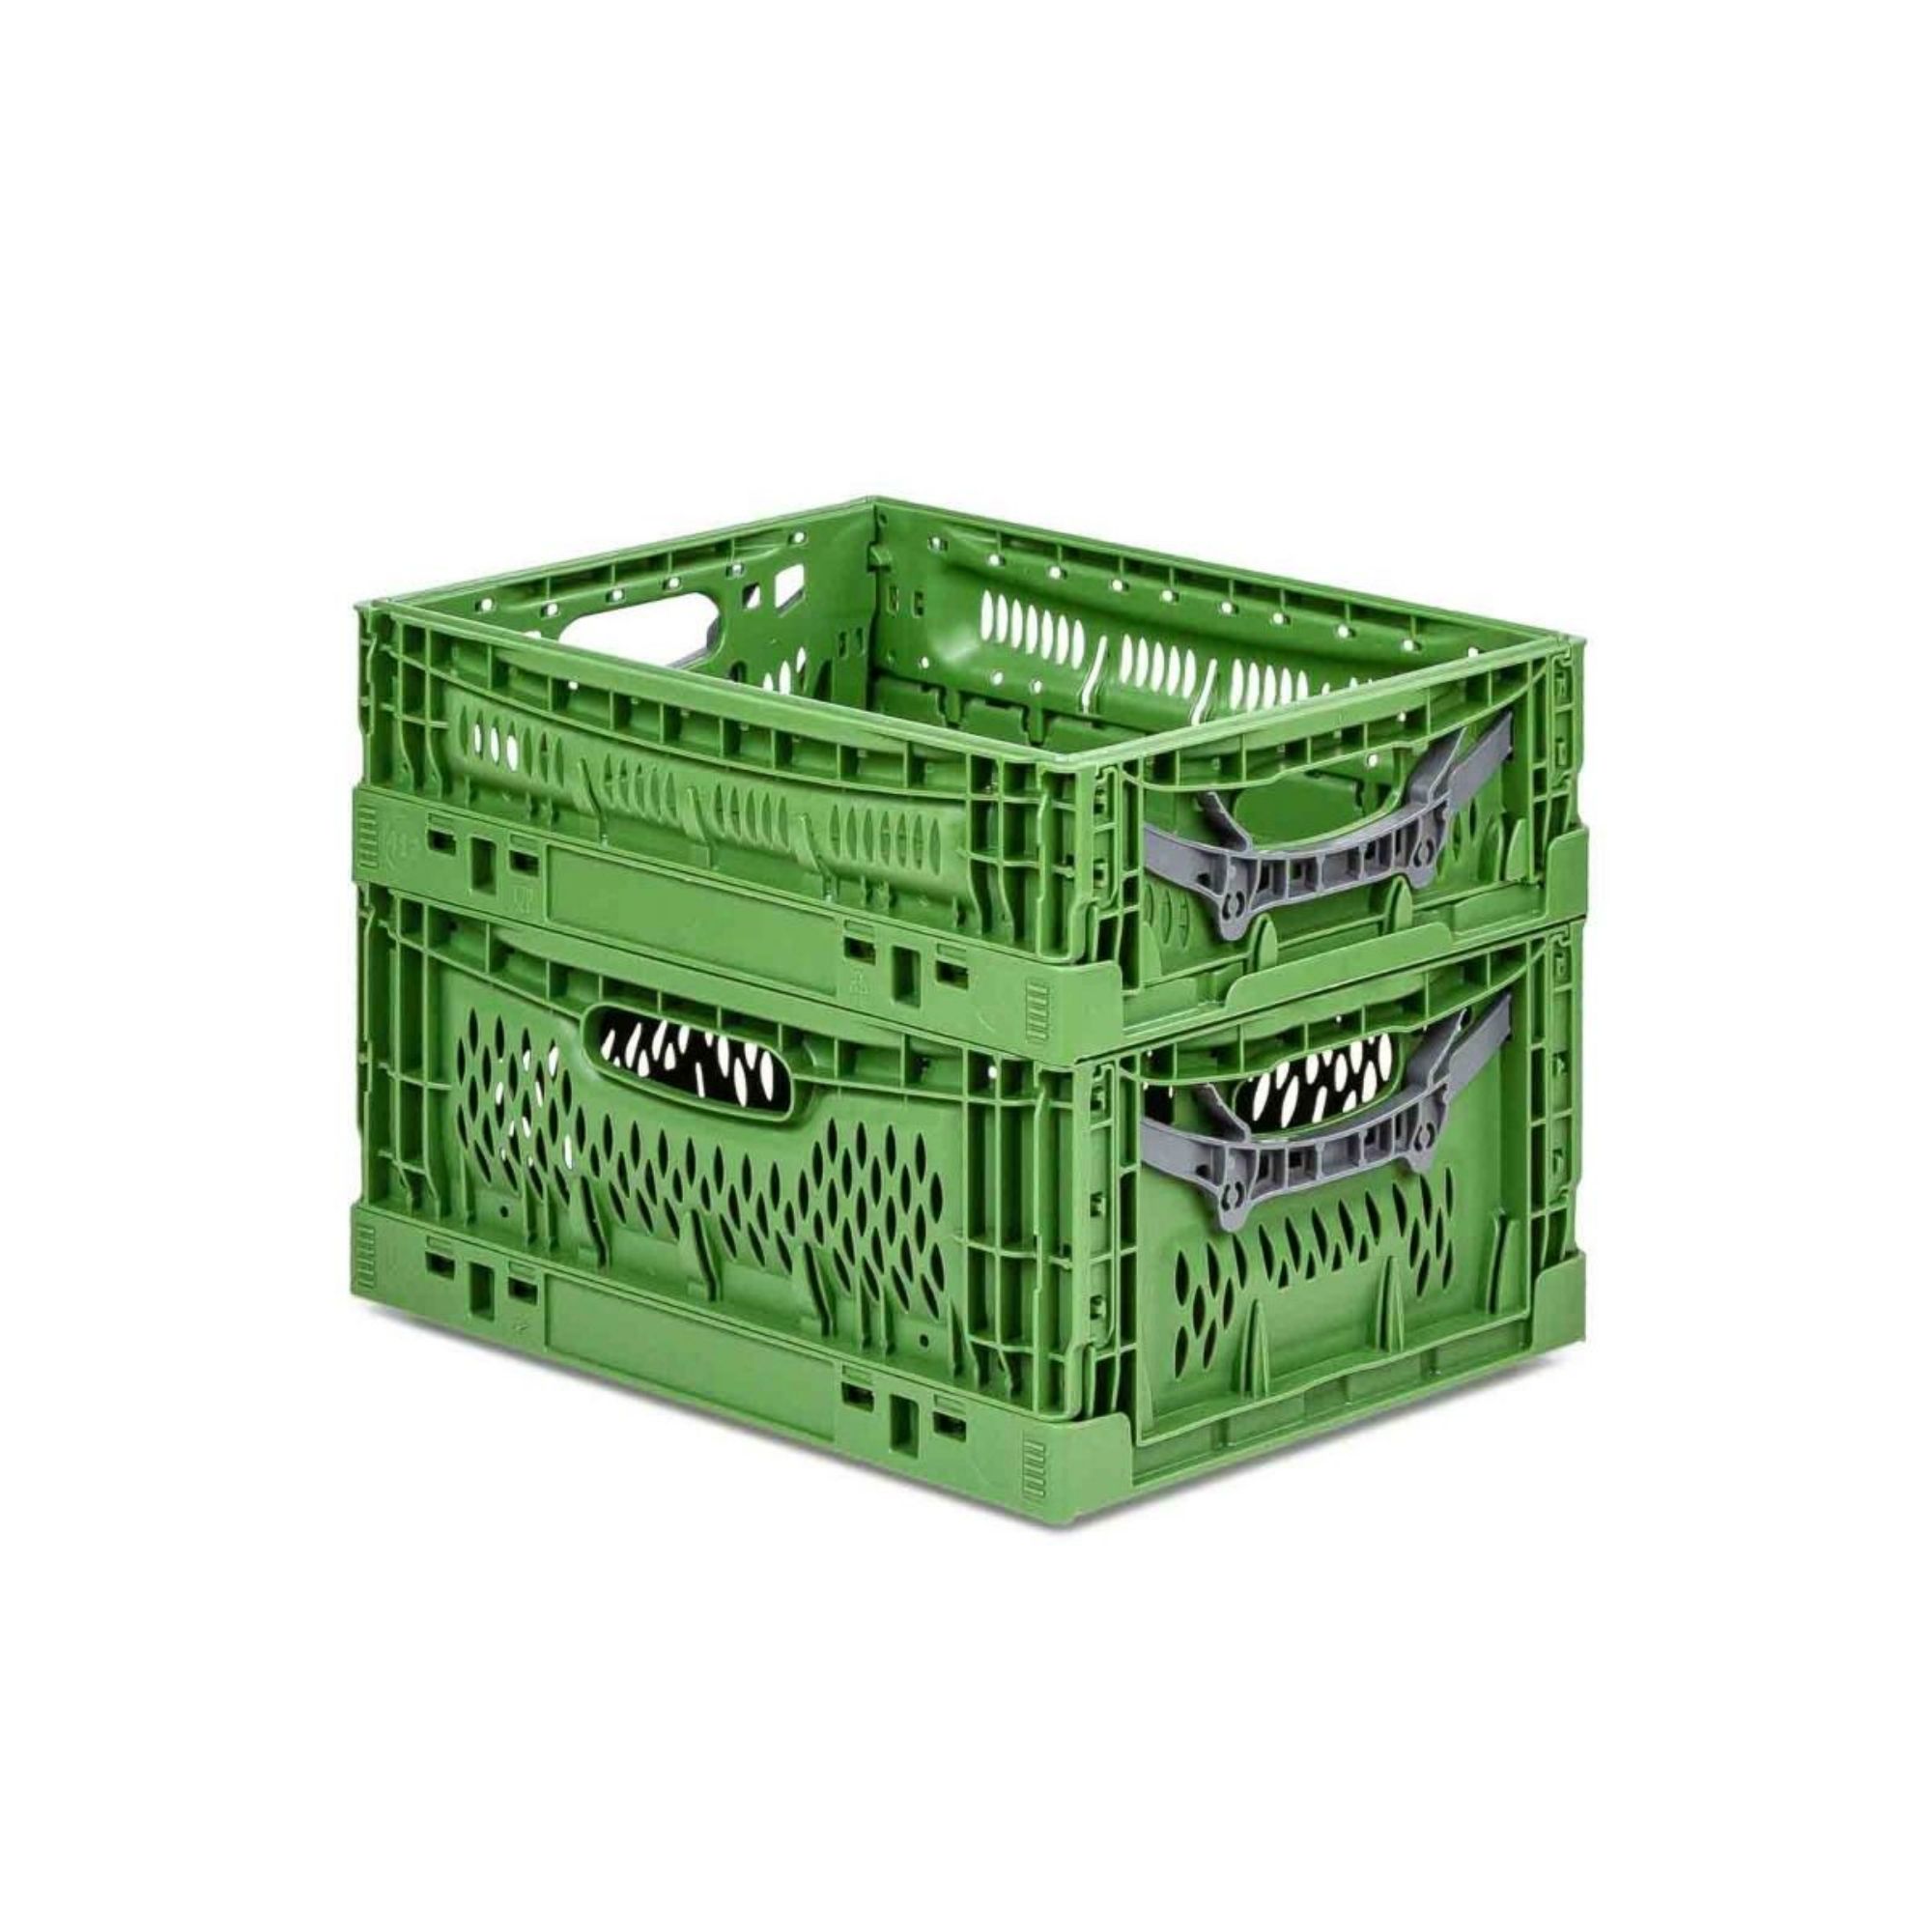 SuperSparSet 20x Stabile Profi-Klappbox Chameleon in Industriequalität | HxBxT 18x40x60cm | 35 Liter | klappbar stapelbar durchbrochen lebensmittelecht | Eurobox Eurobehälter Transportbehälter Stapelbehlter Faltbox